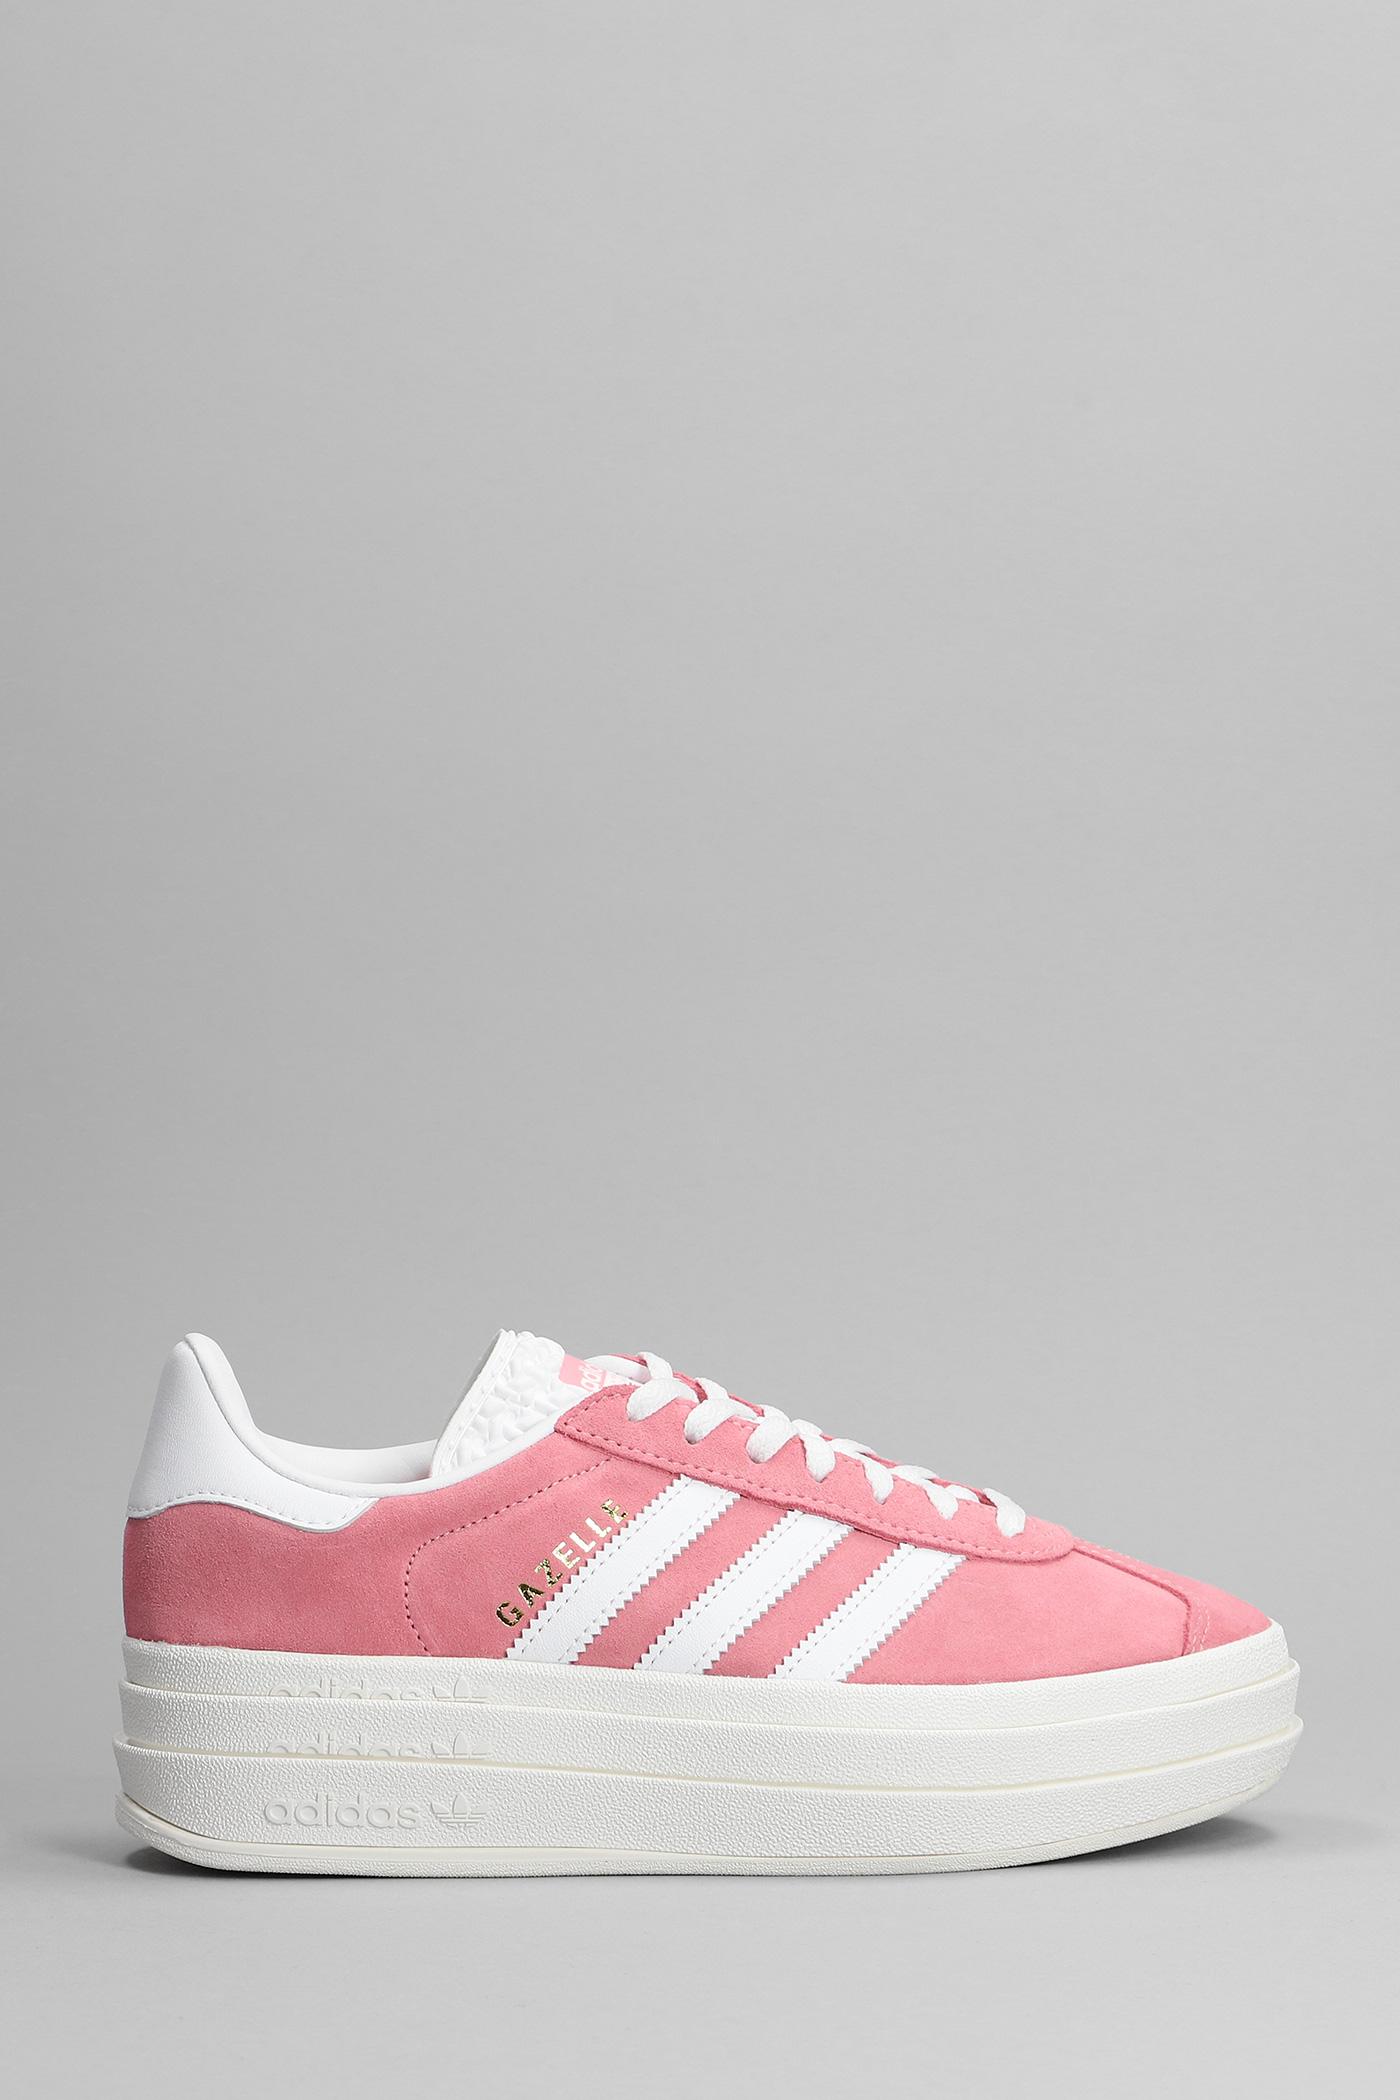 adidas Originals Gazelle Bold W Sneakers in Pink | Lyst